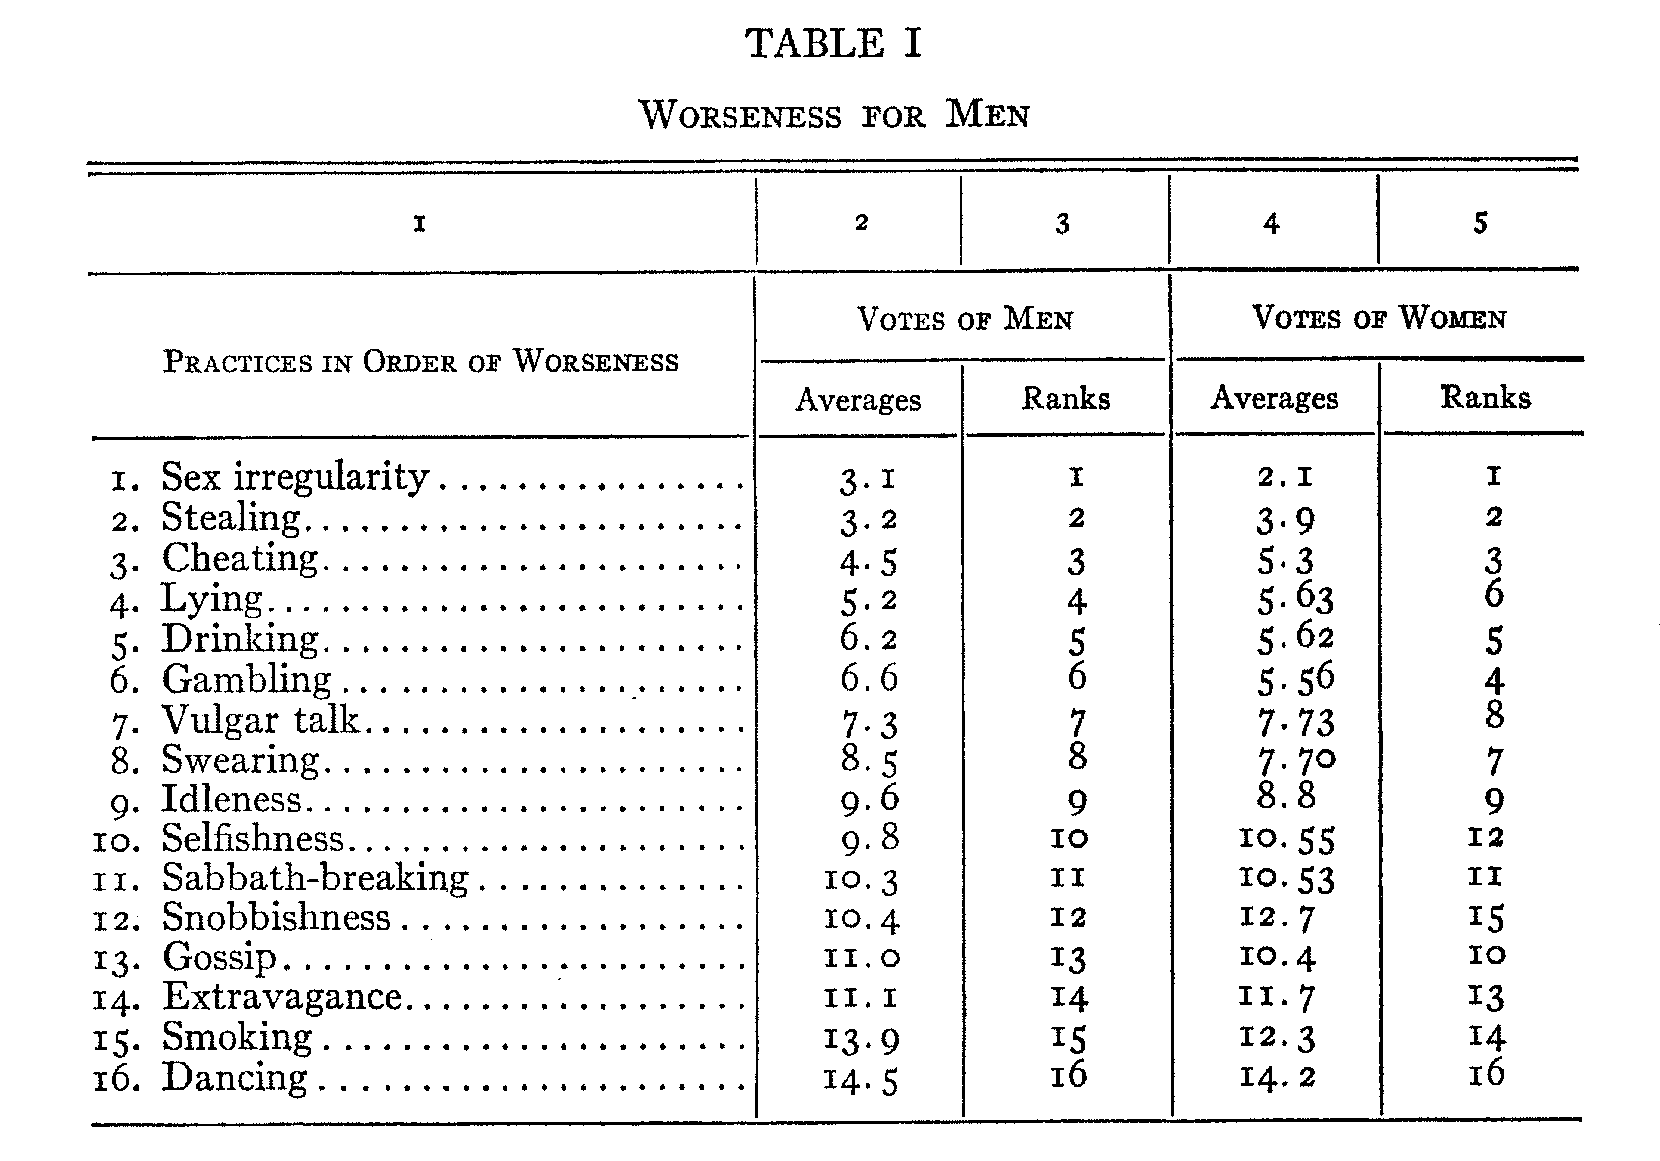 Table 1, Worseness for Men